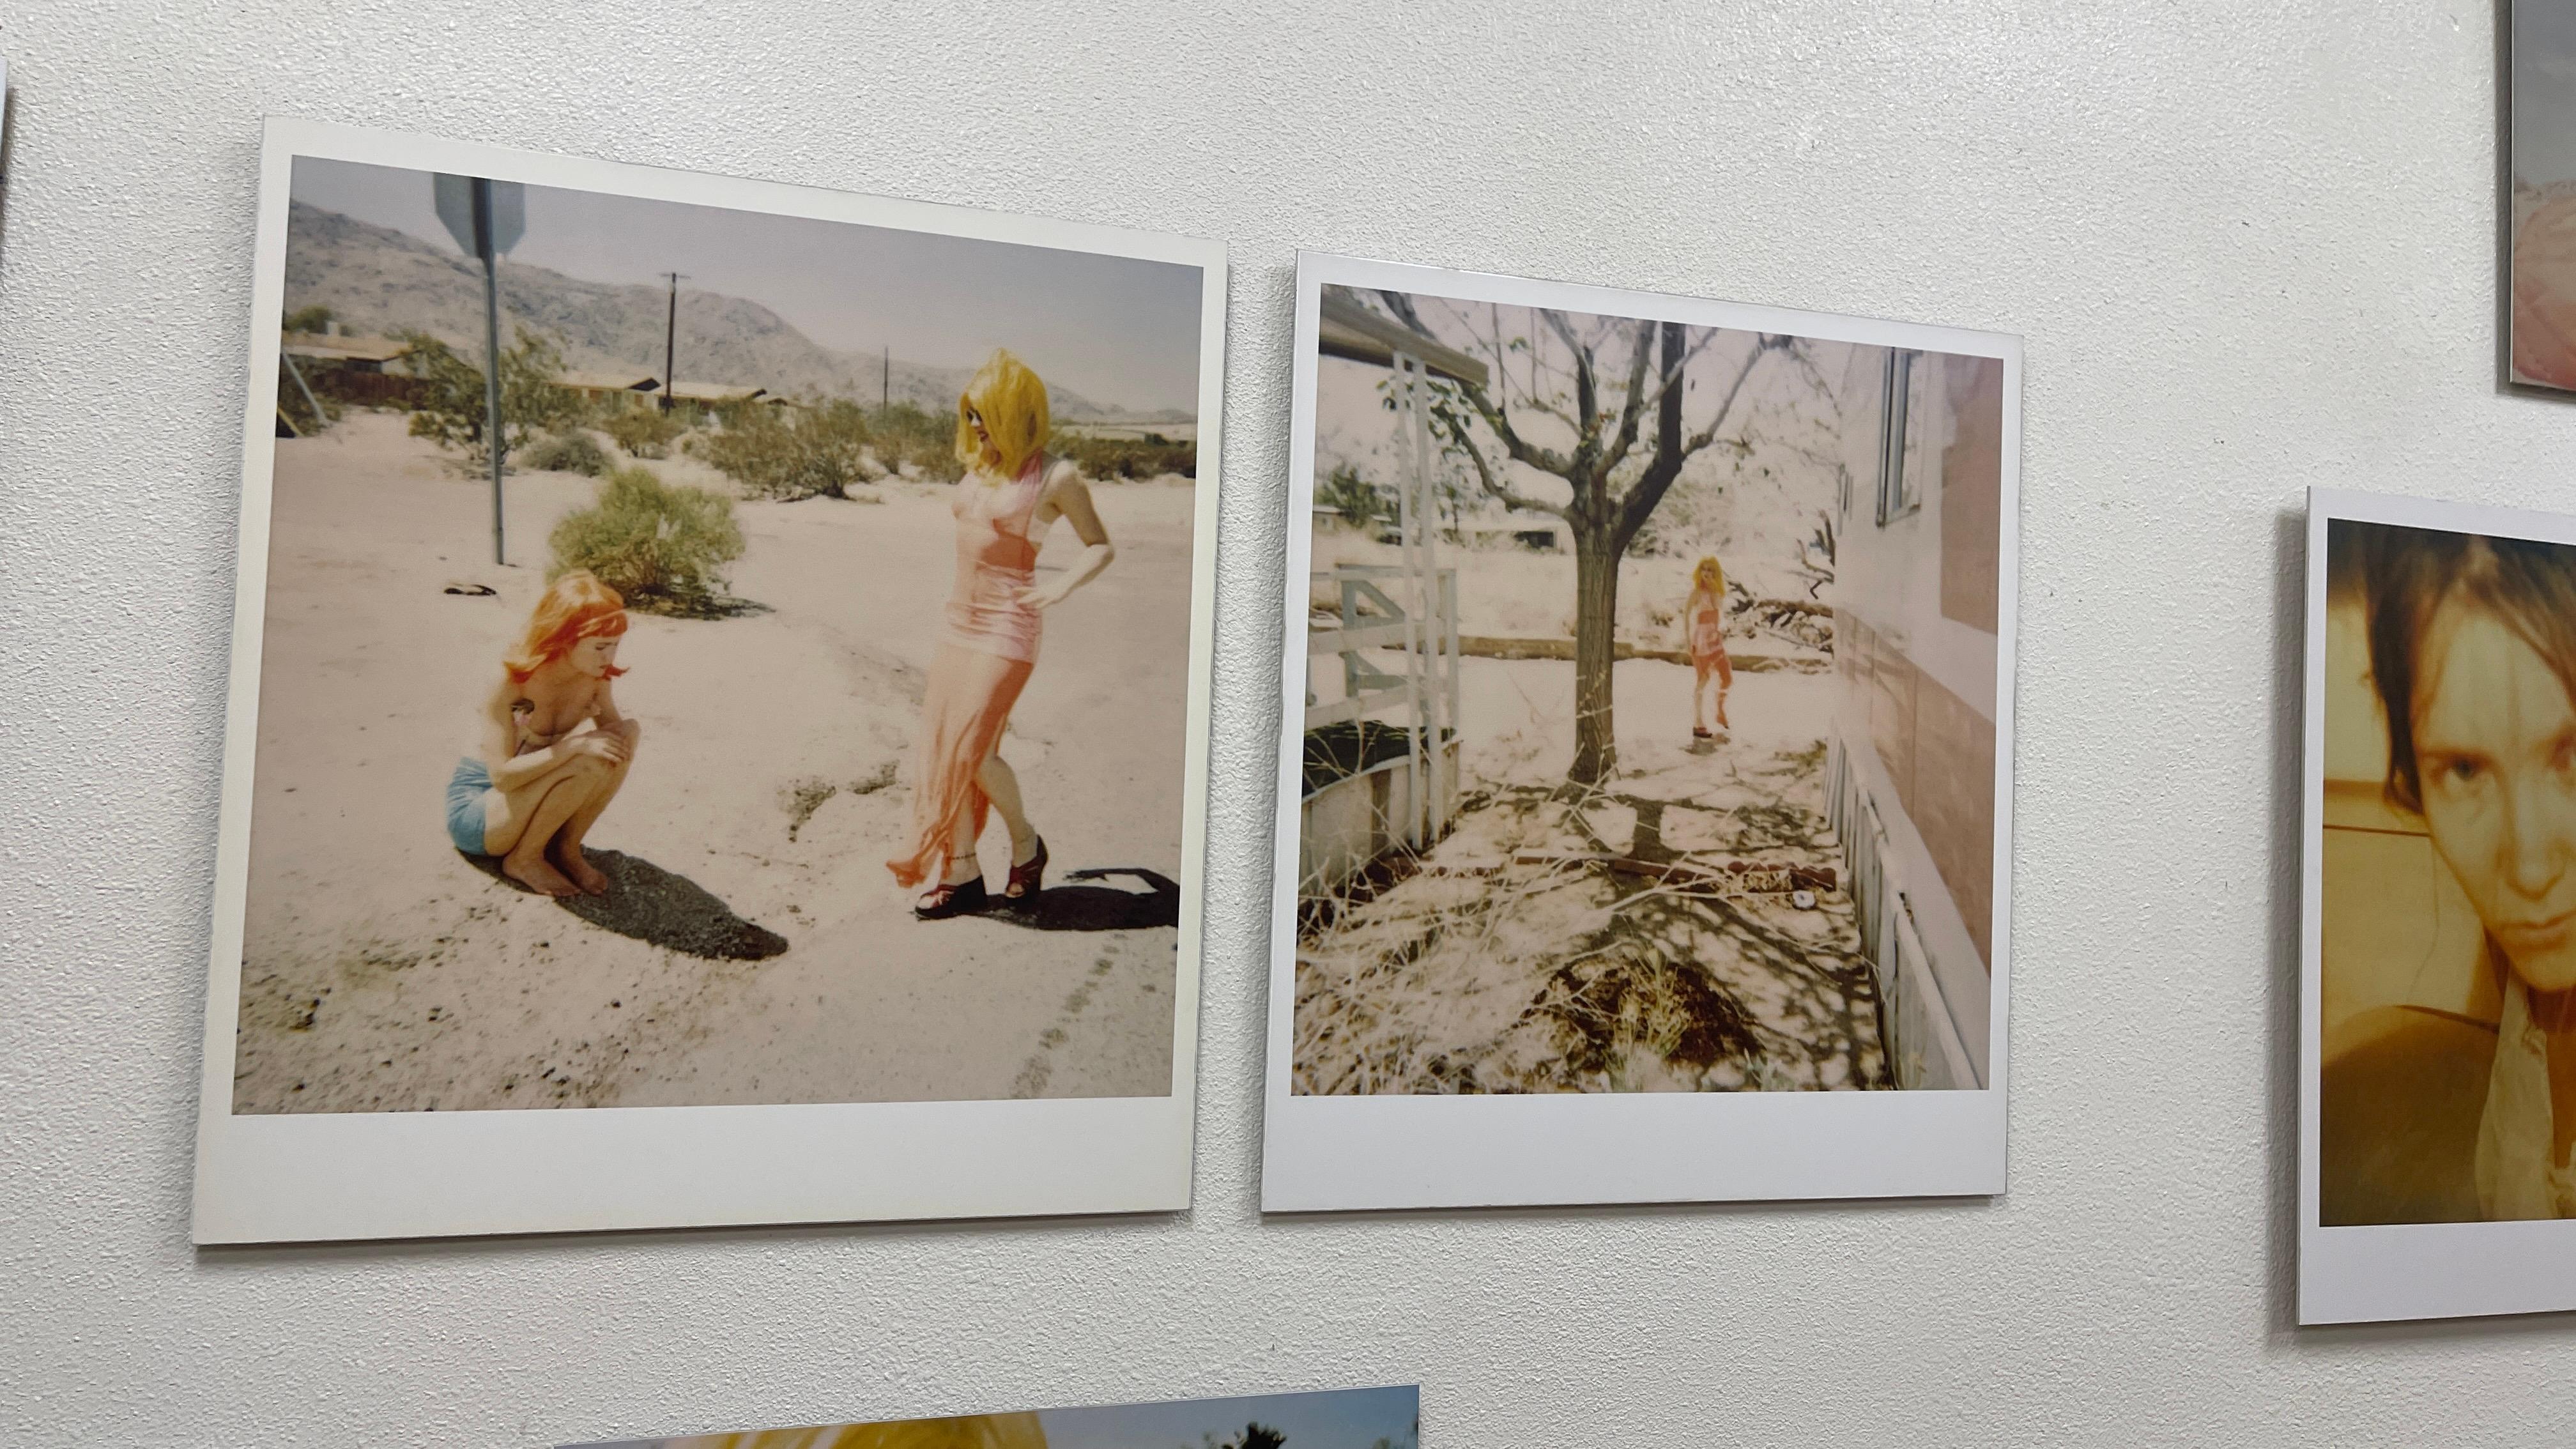 Radha and Max on Dirt Road (29 Palms, CA) - analogue, Polaroid, contemporain - Photograph de Stefanie Schneider